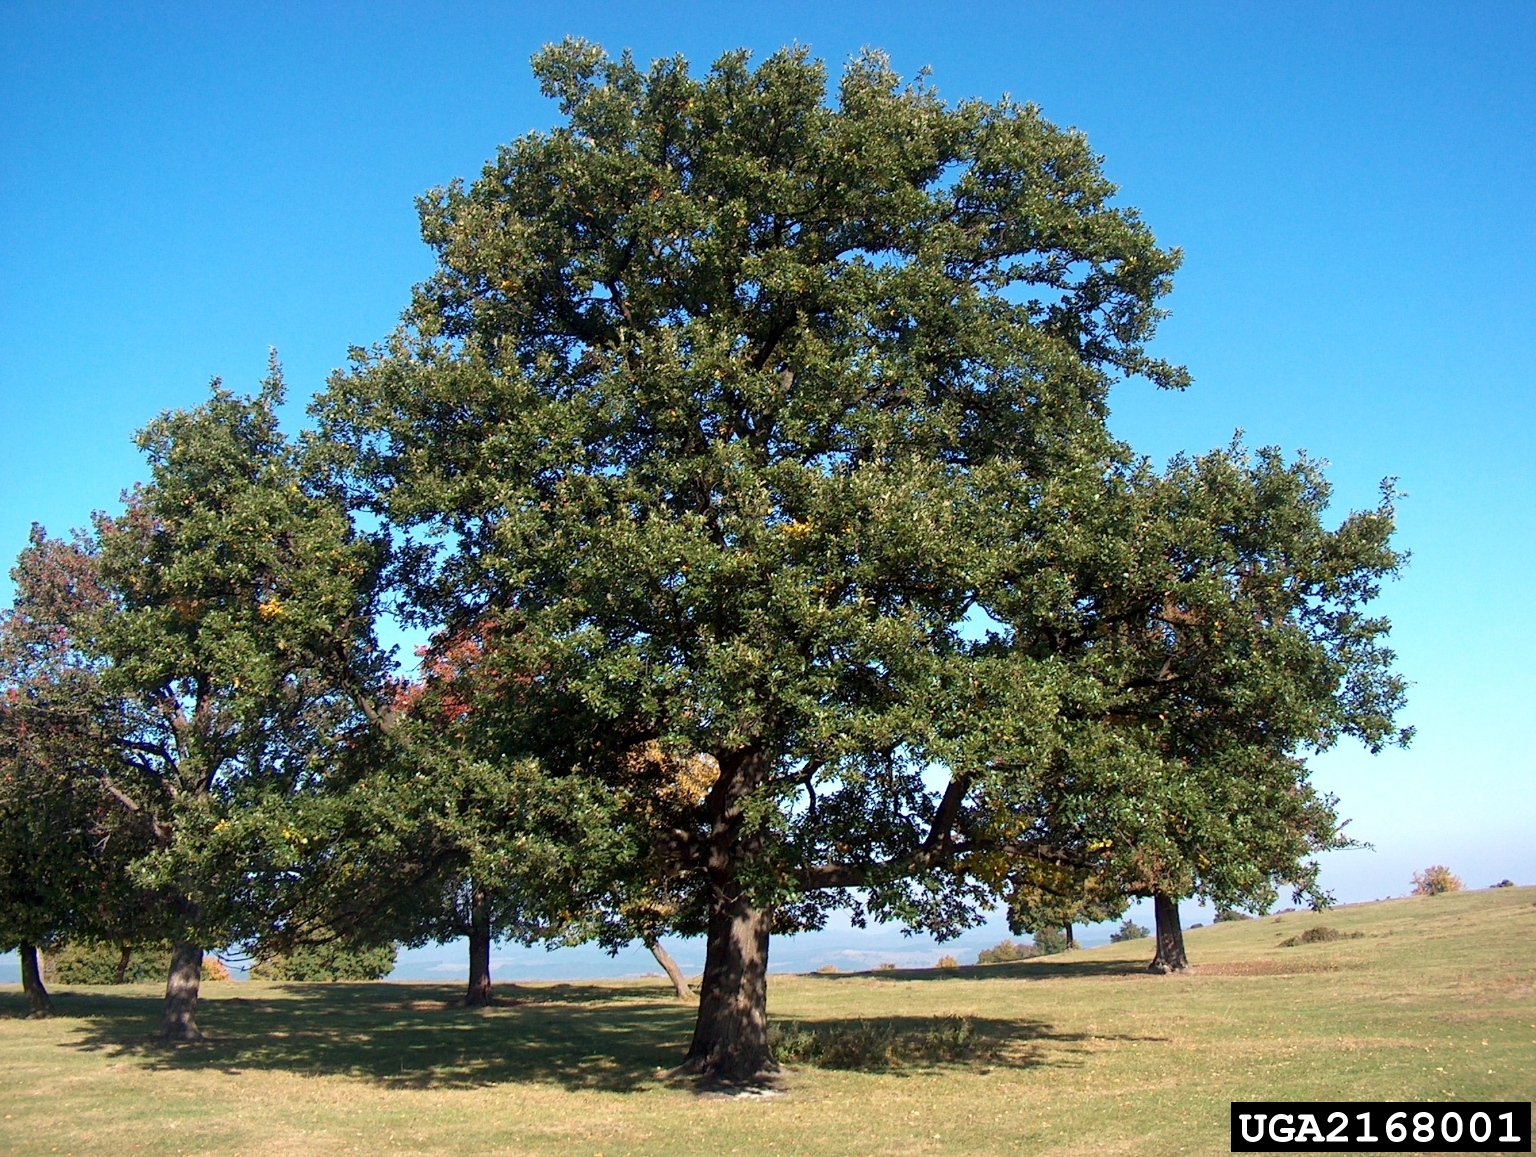 Quercus Tree